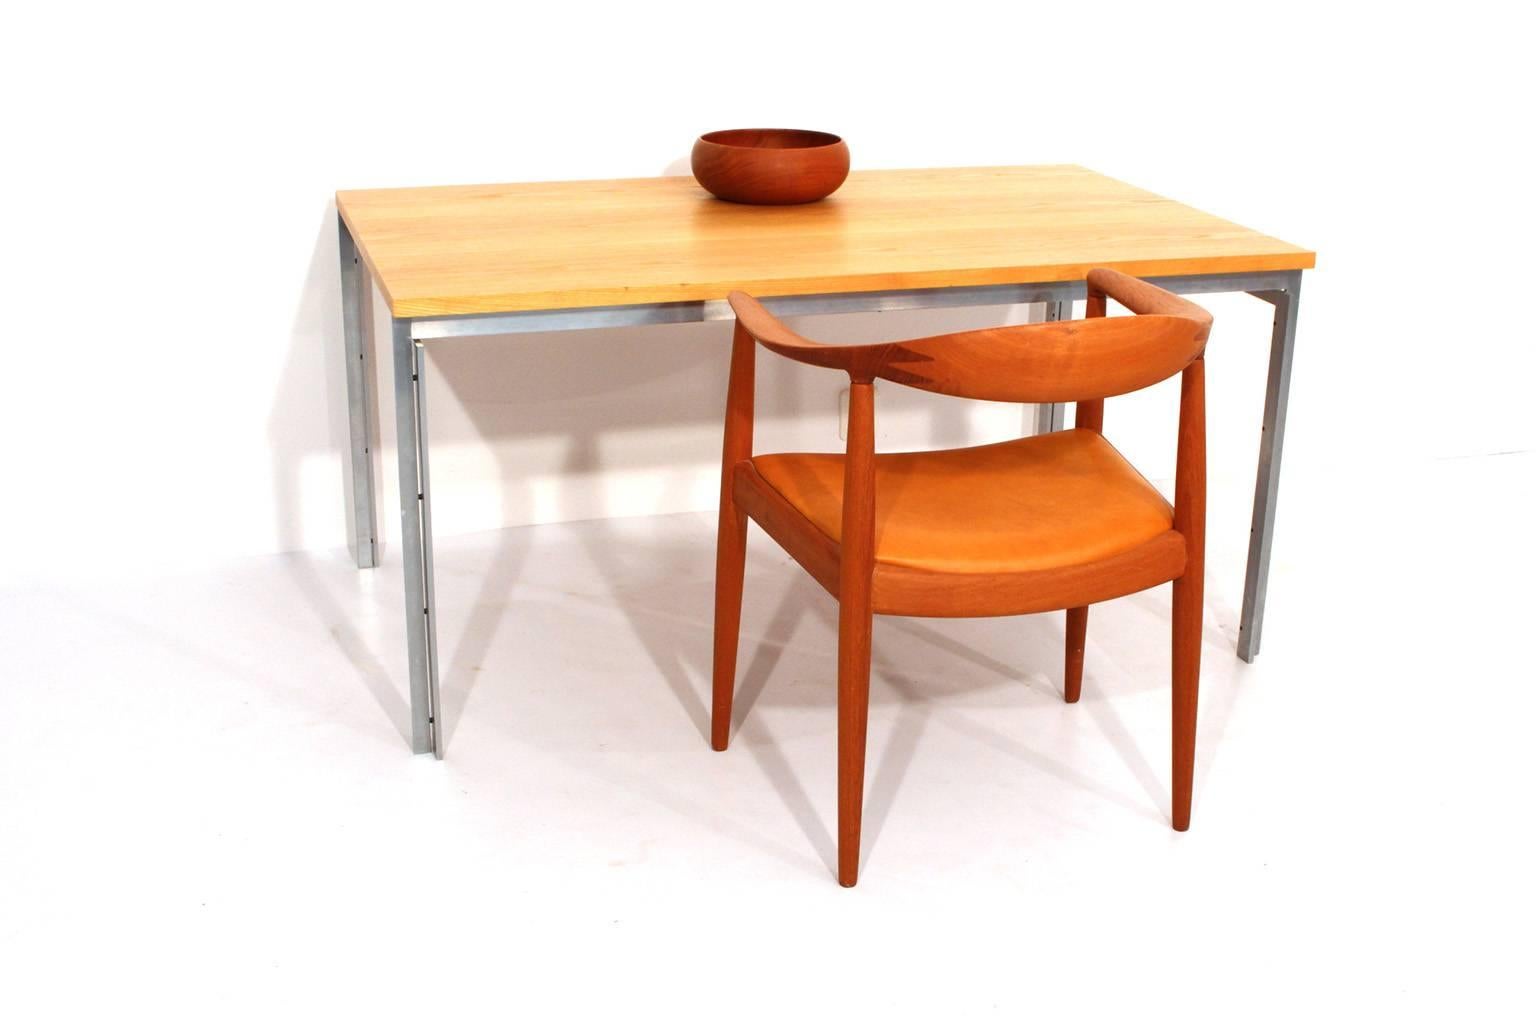 Work Table-Desk, Poul Kjaerholm PK 53 In Excellent Condition For Sale In Lund, SE